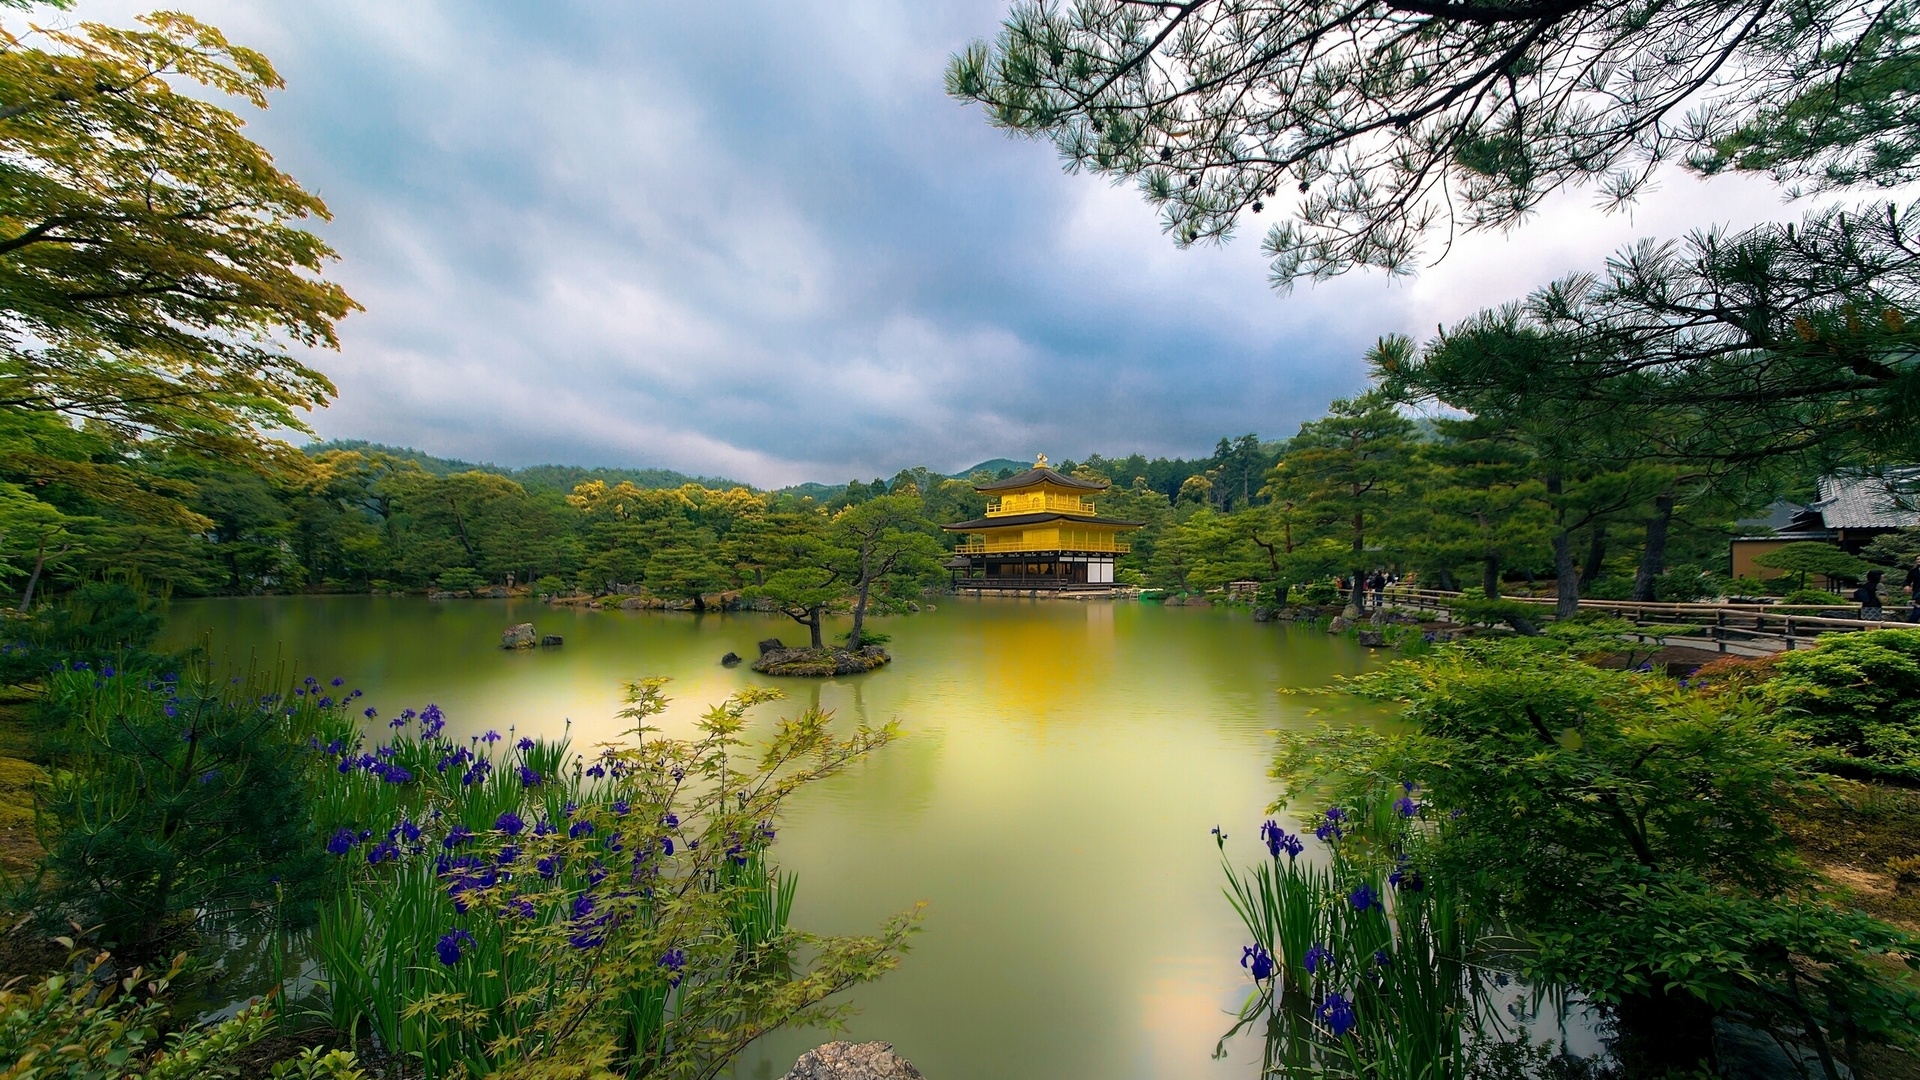 Golden-Pavilion-temple-Kyoto-Japan-lake-trees-flowers-park_1920x1080.jpg